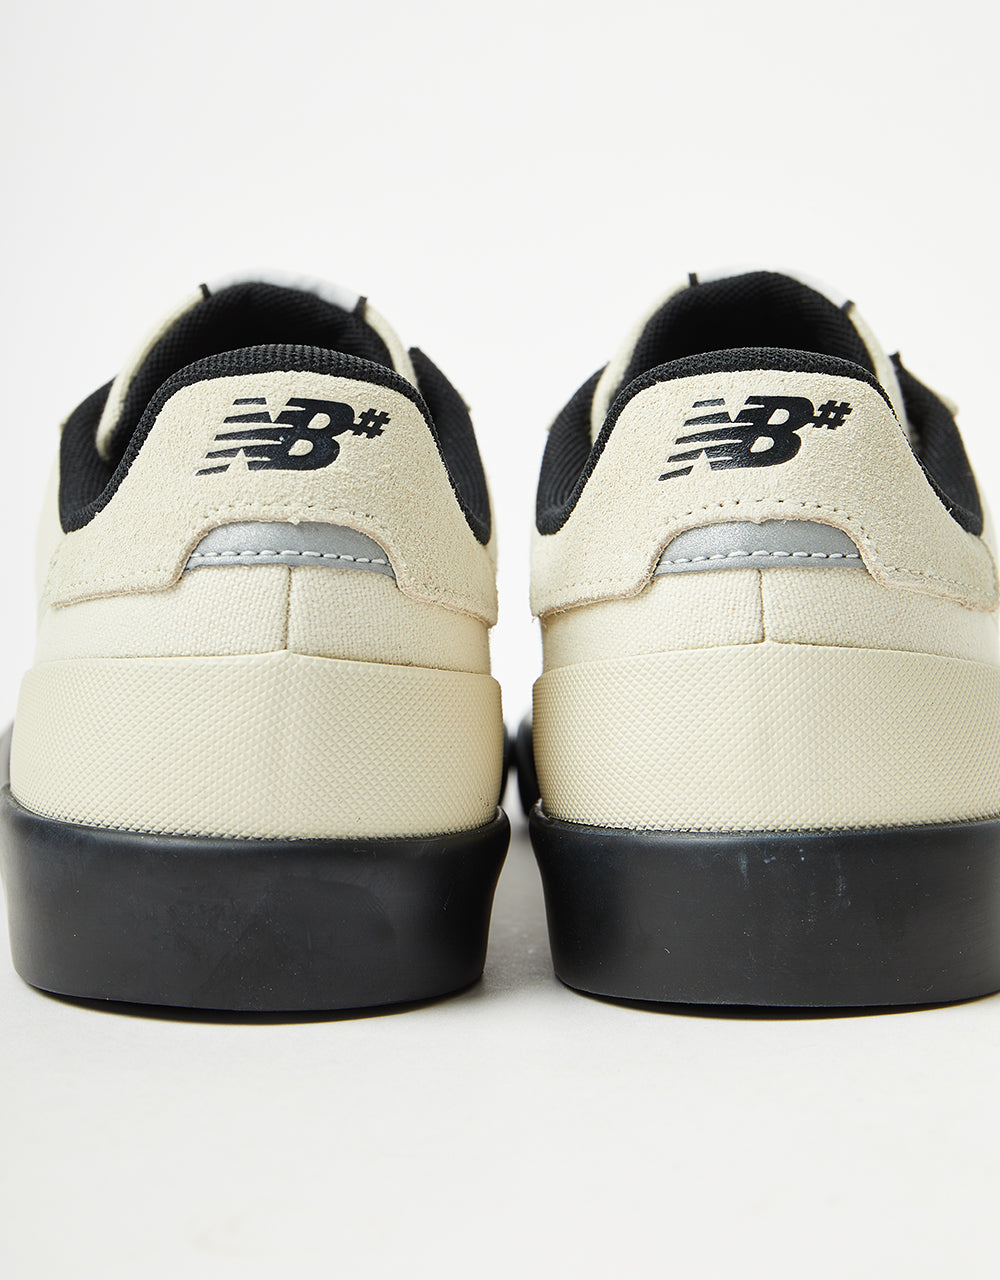 New Balance Numeric 272 Skate Shoes - Sea Salt/Black